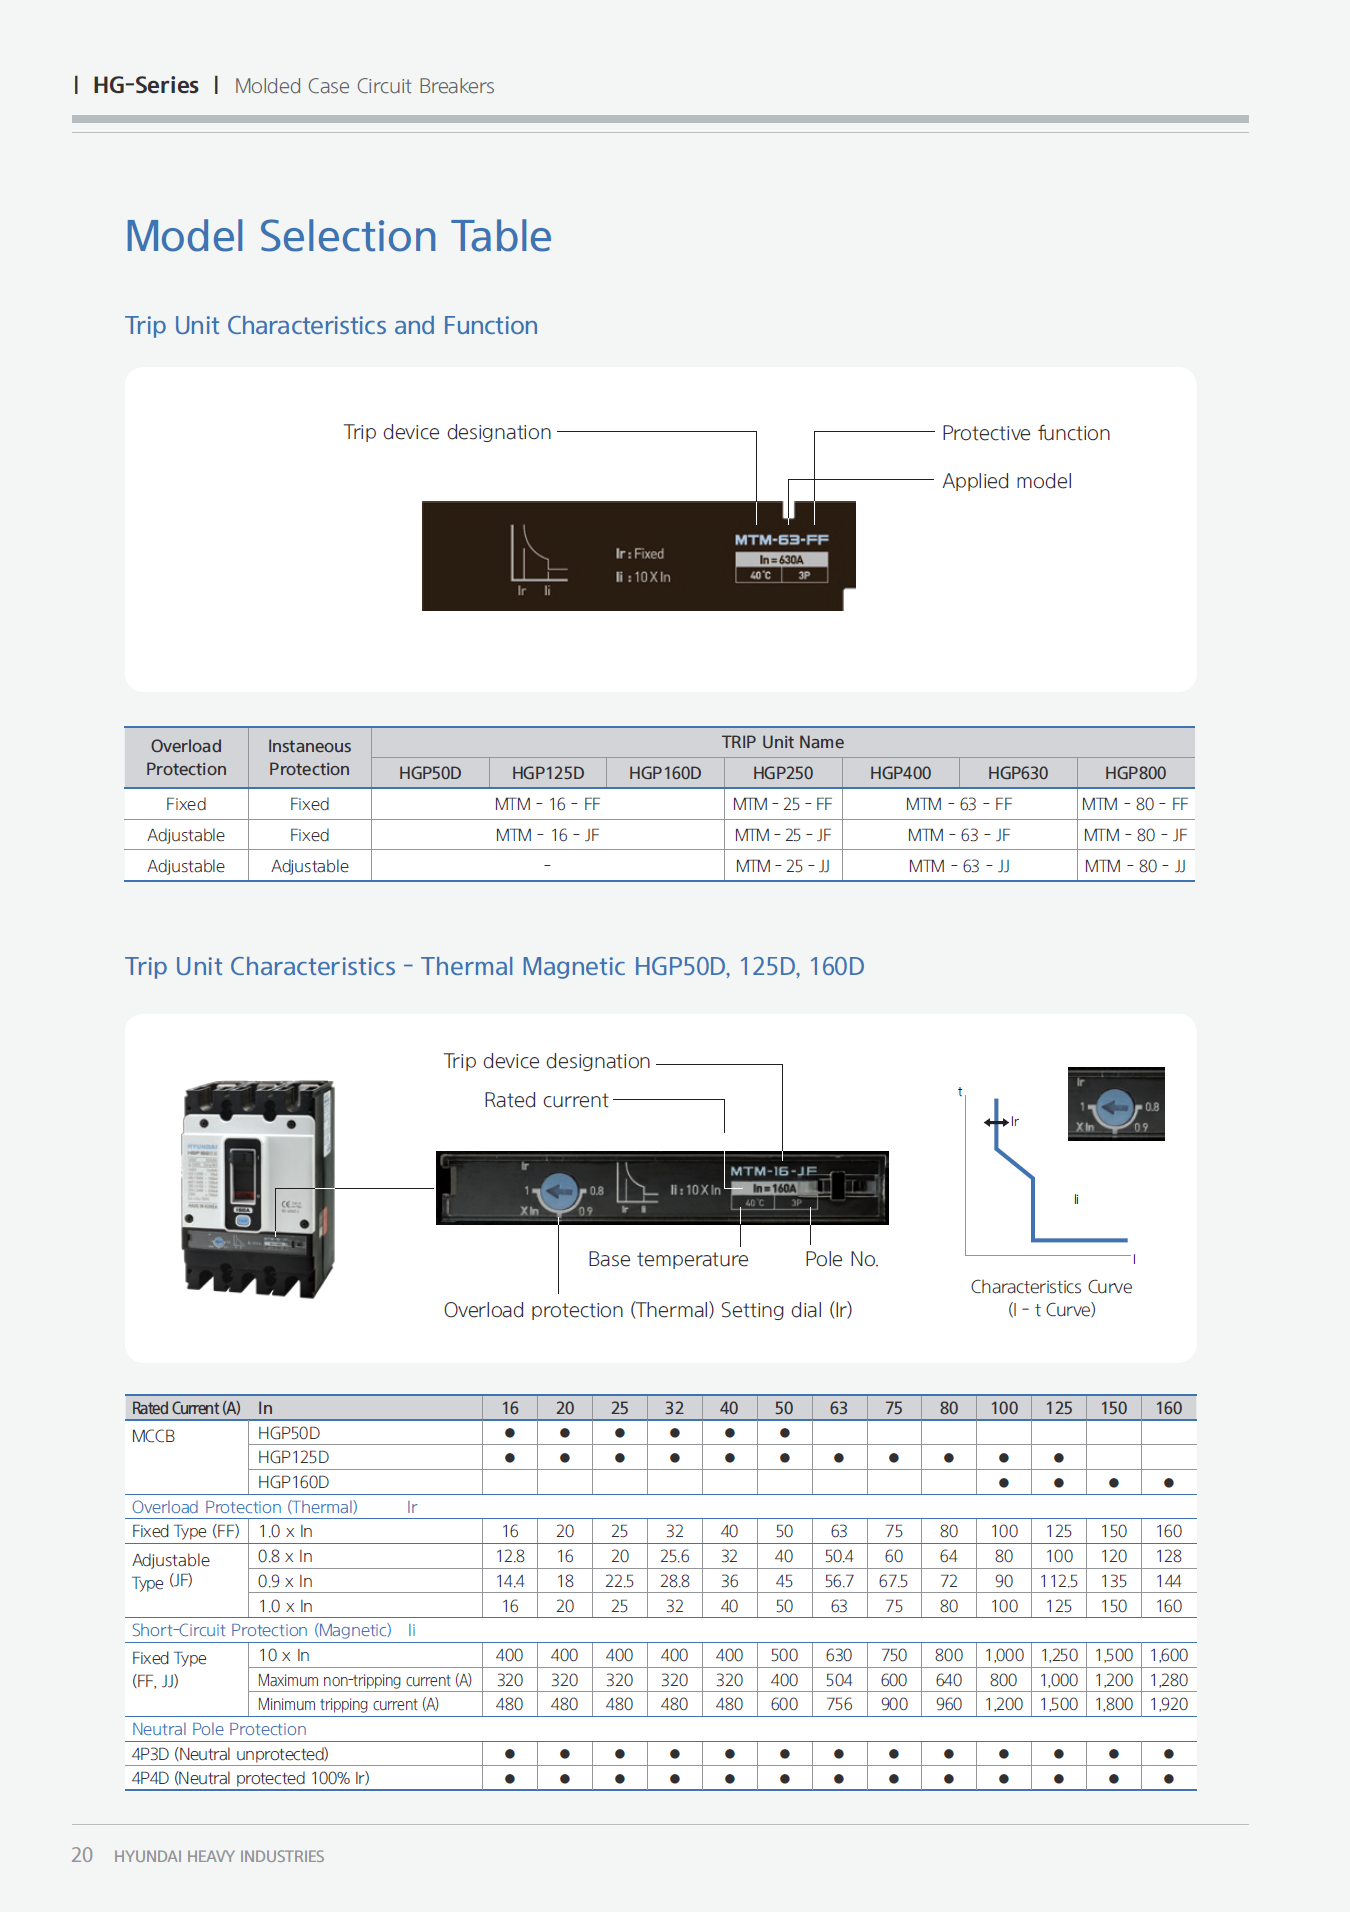 Hyundai Marine Circuit Breaker (MCCB) - HGP250S 3P Fixed / Plug-in Type